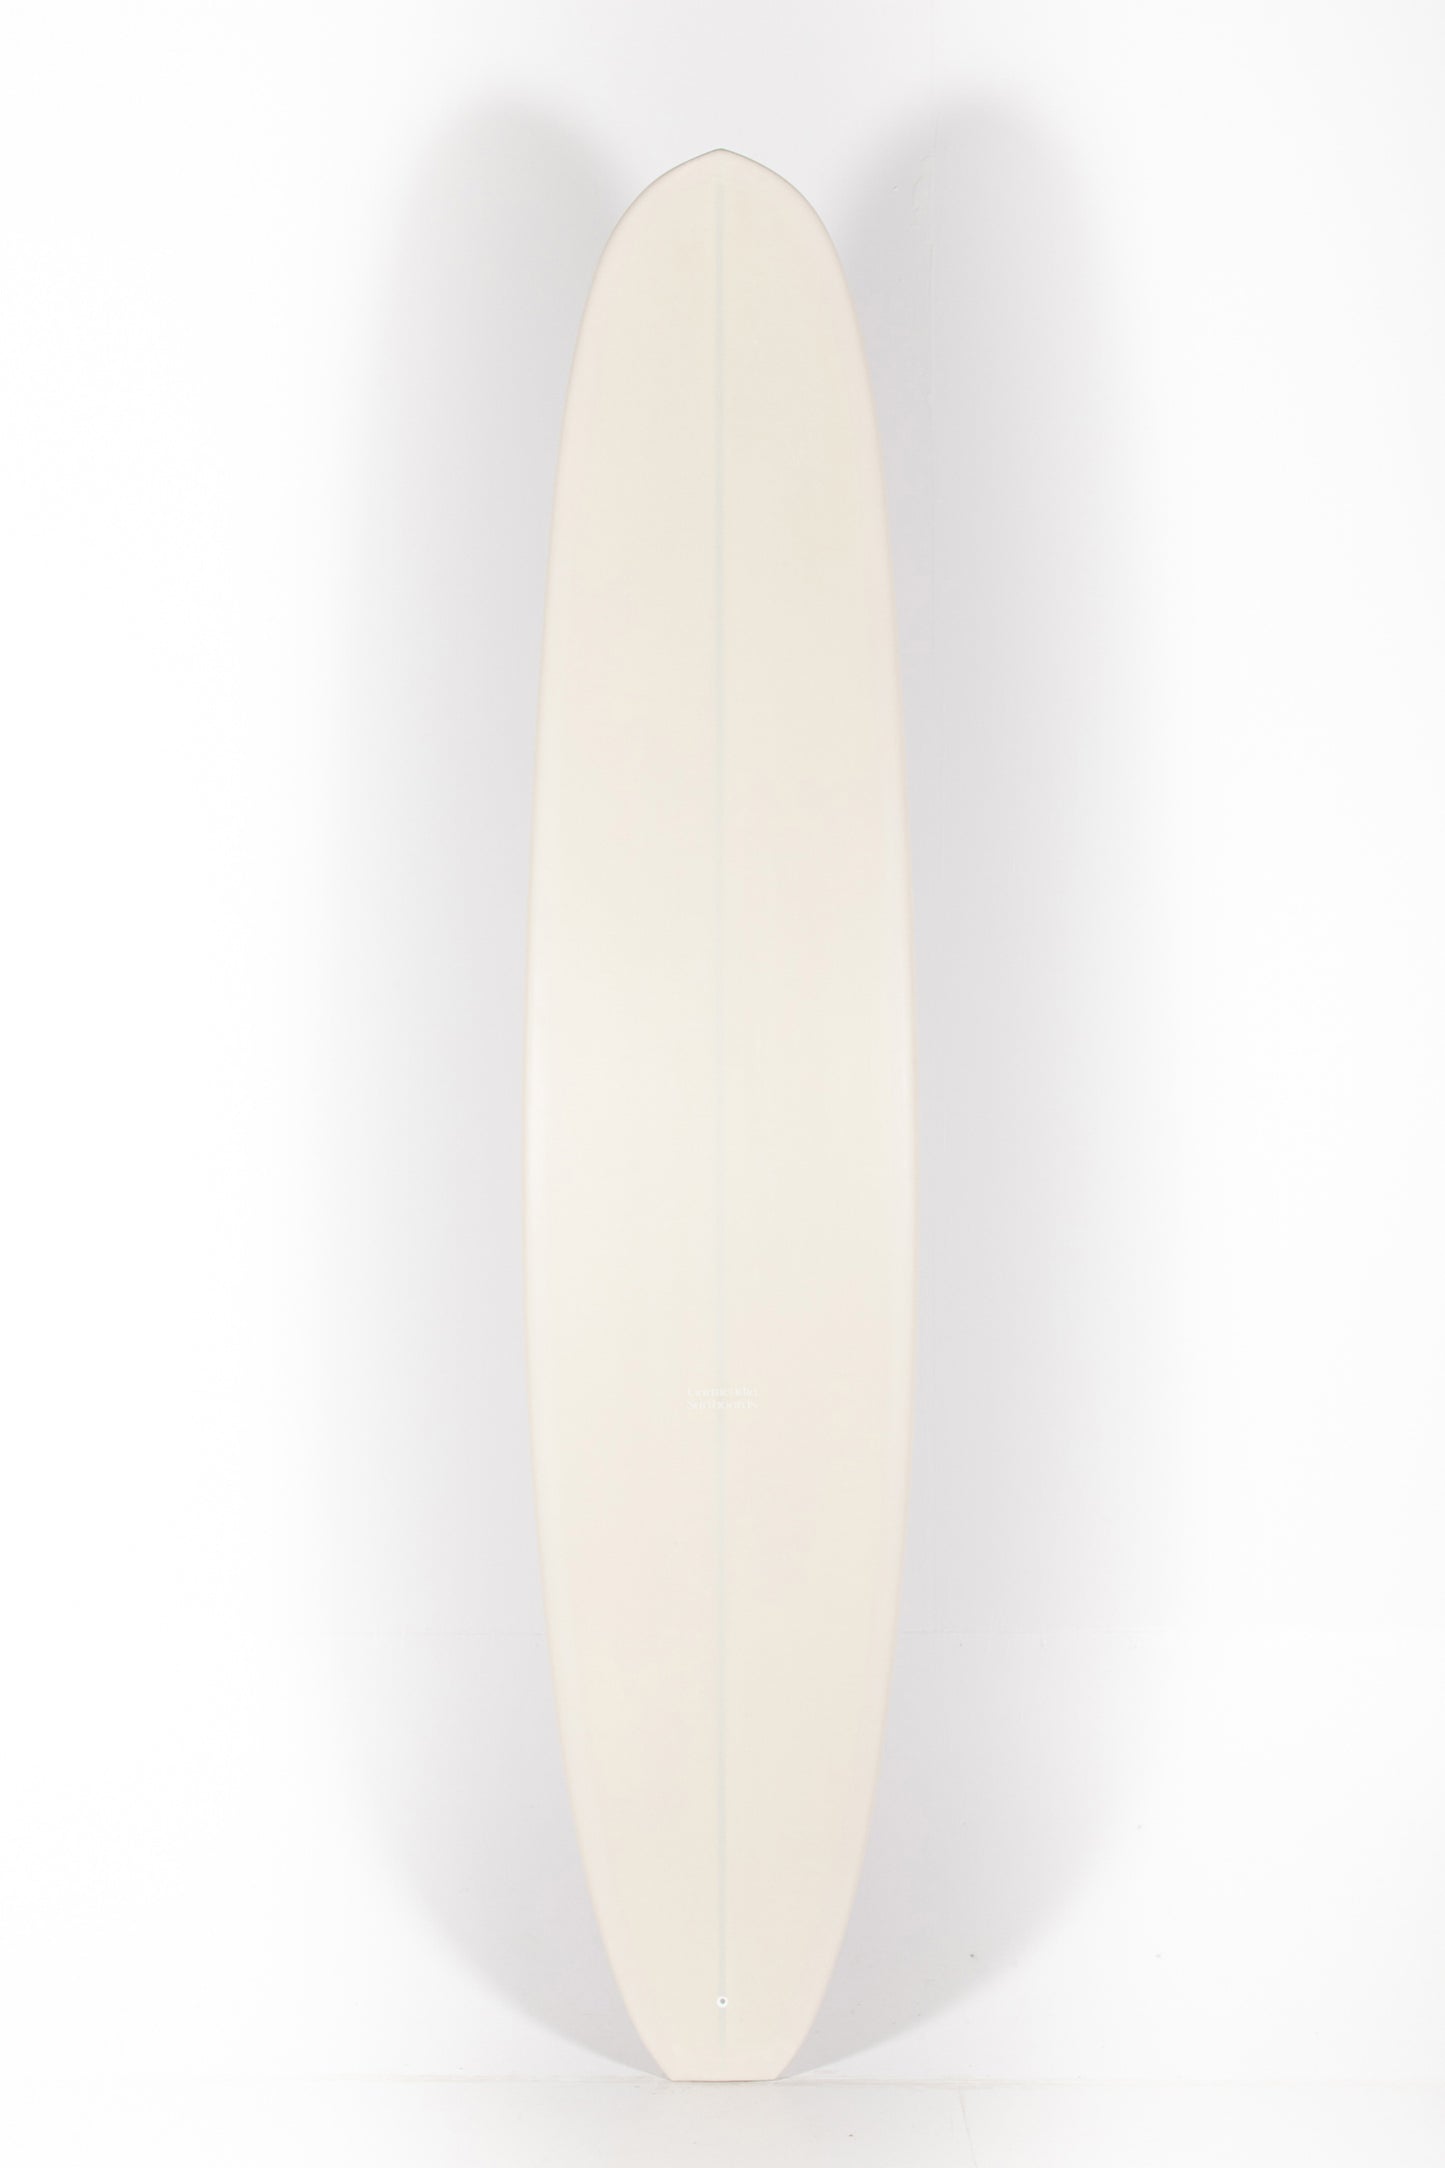 Pukas Surf Shop - Garmendia Surfboards - BULLET - 9’2” x 22 7/8 x 2 7/8 - Ref.GARMENBULLET9.2